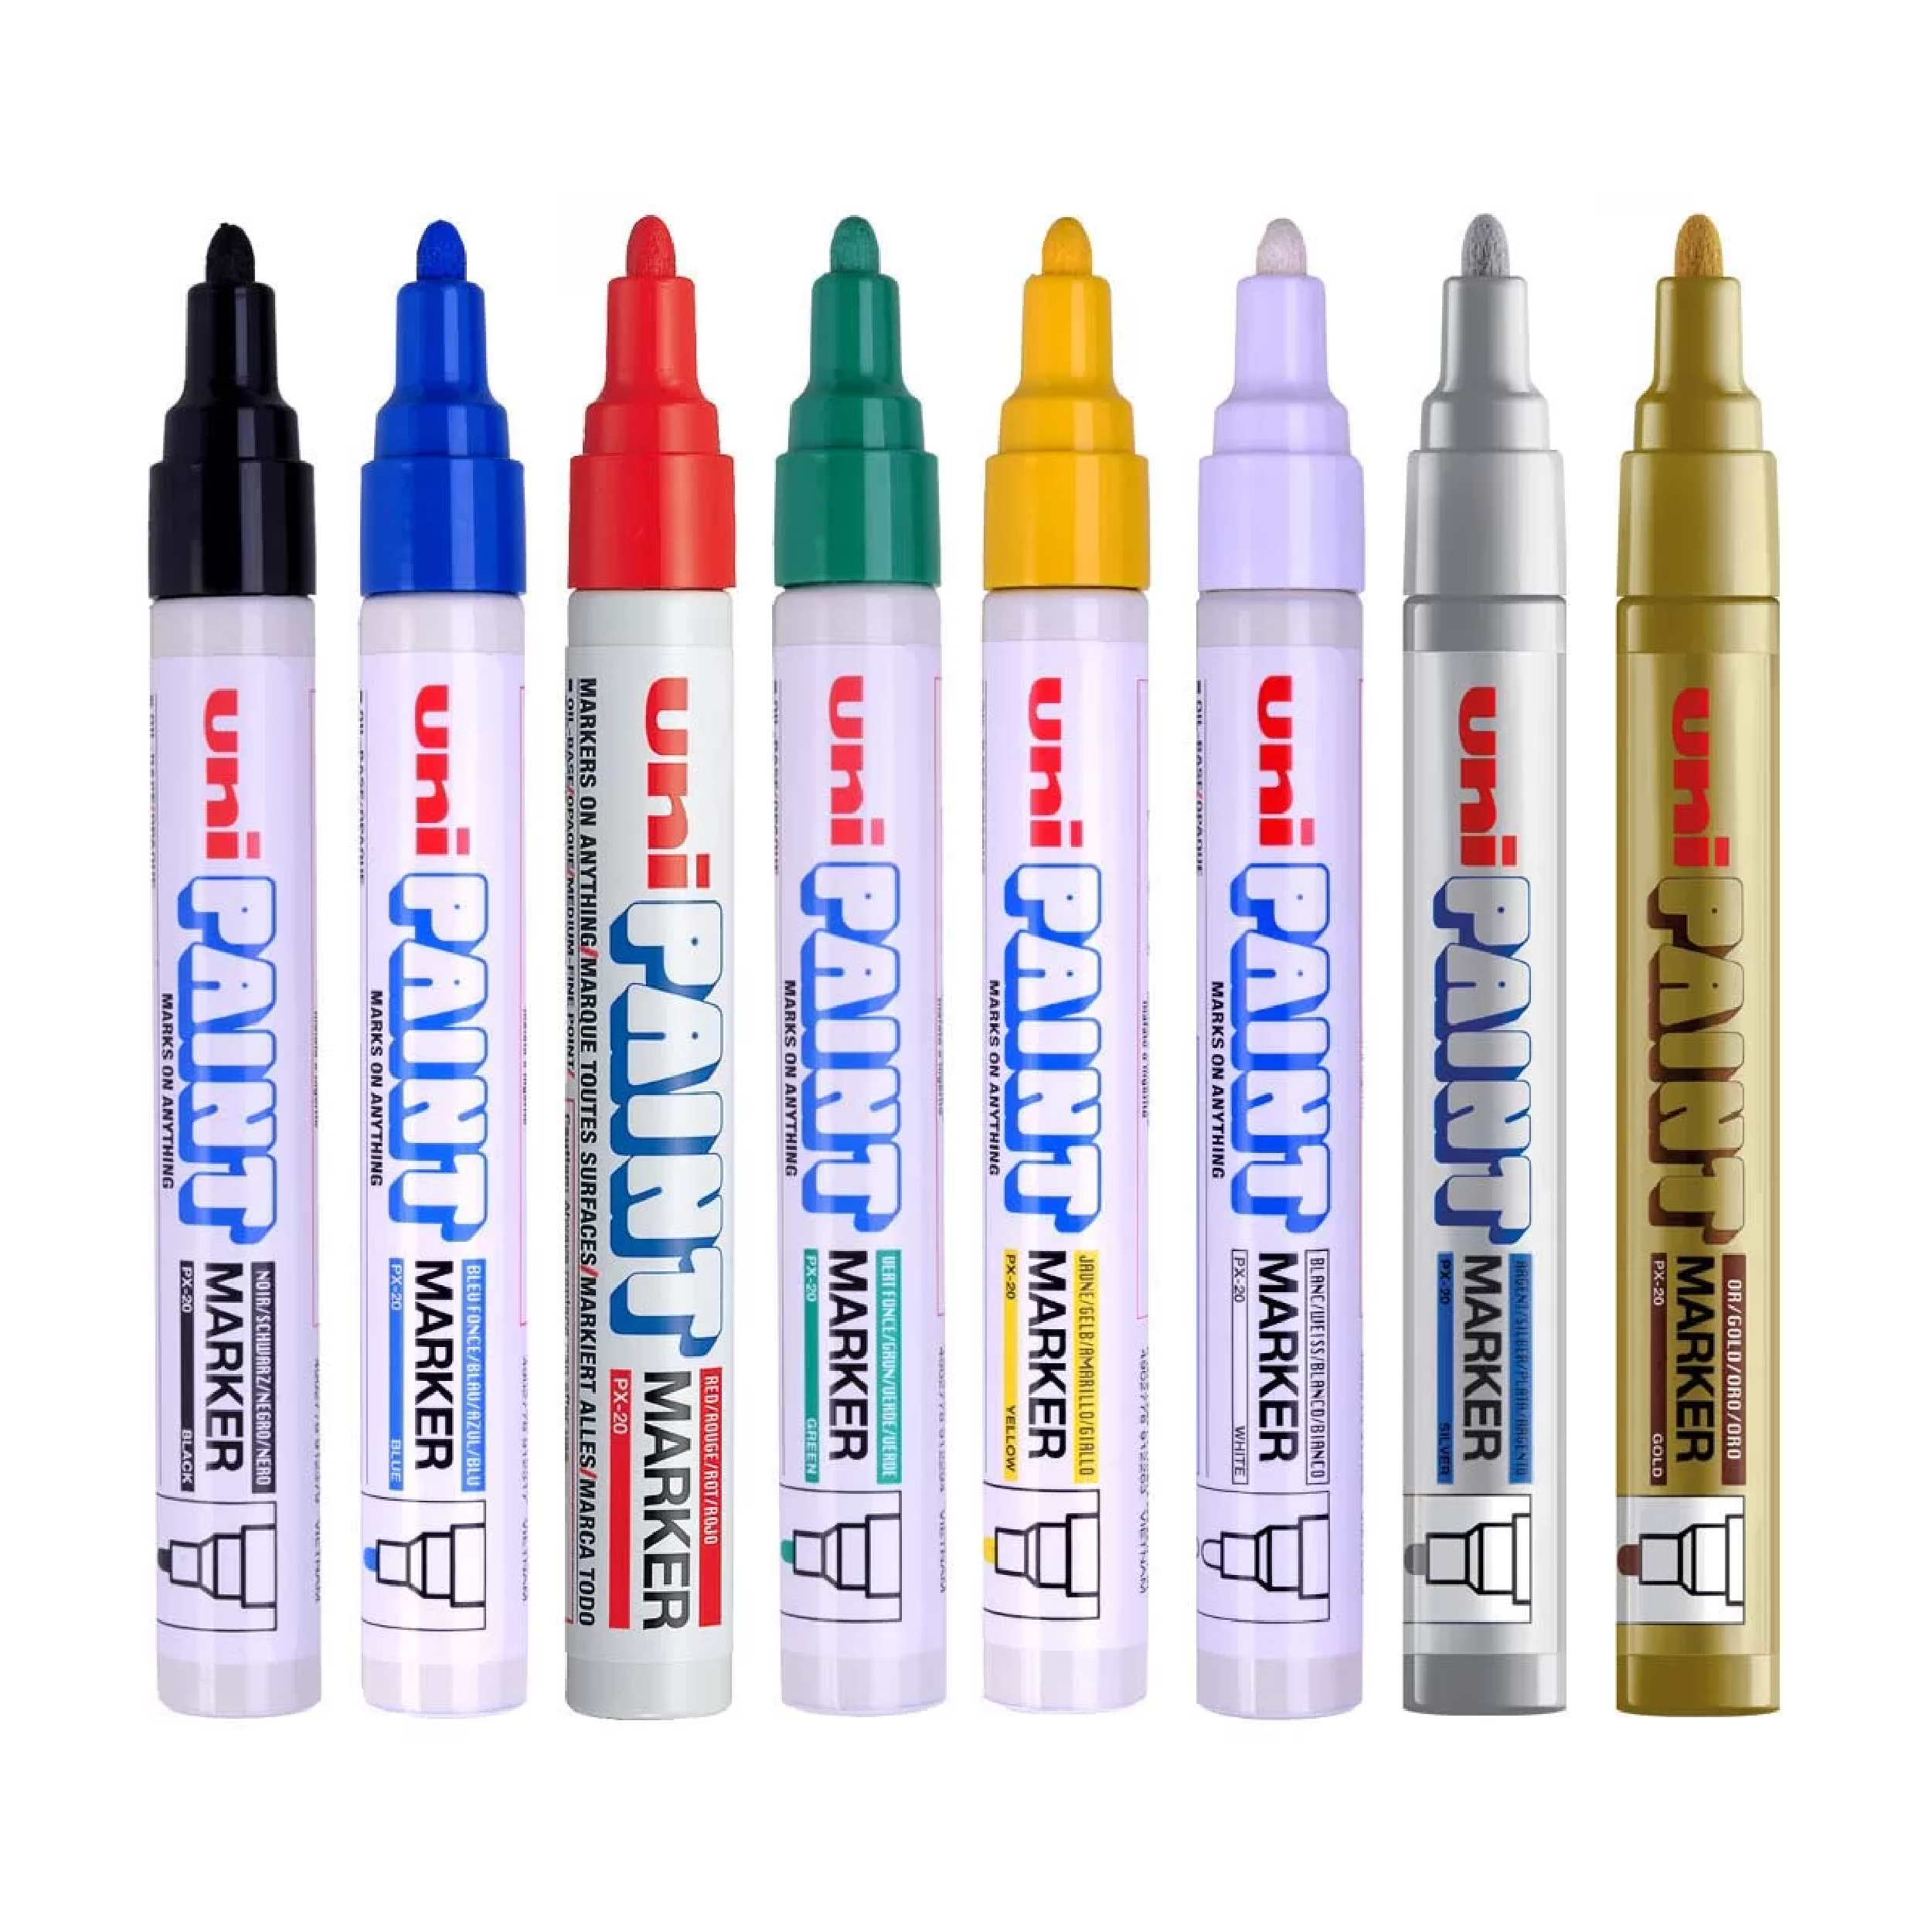 uni Paint Oil Based Paint Markers, Fine Point, Assorted Colors, 12 Count